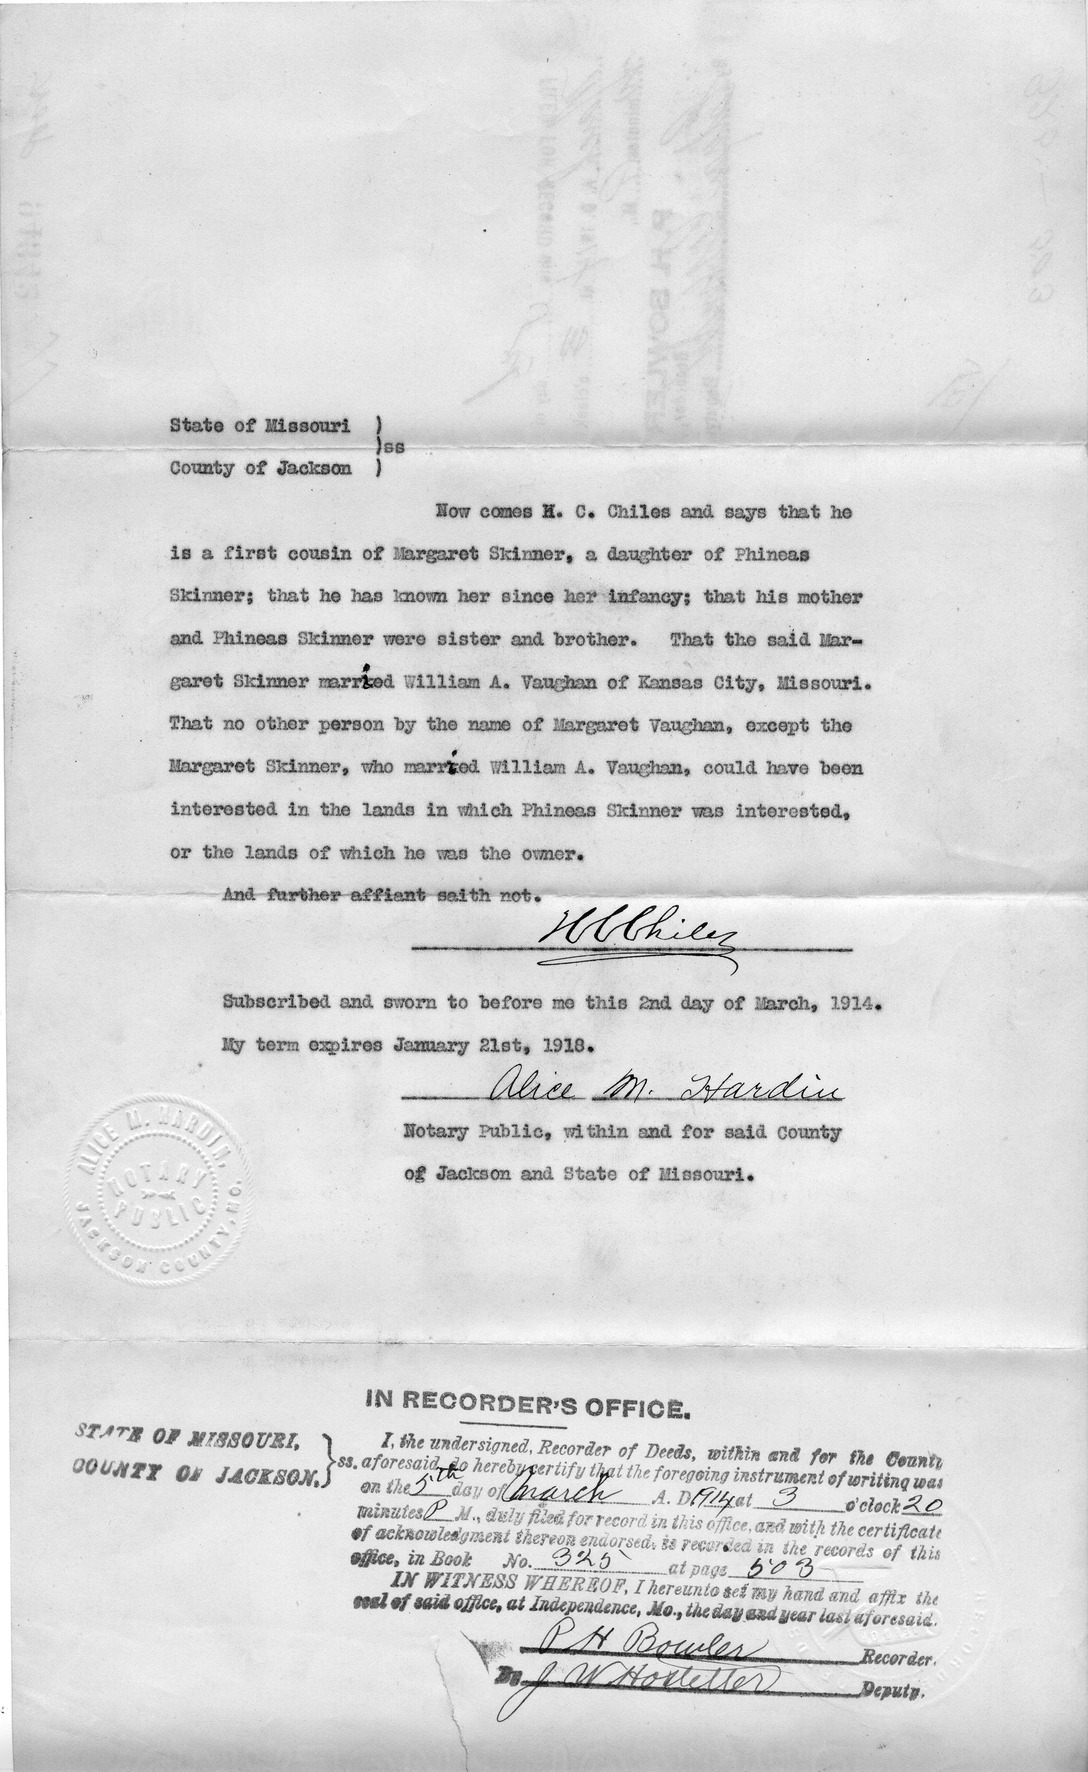 Affidavit of H. C. Chiles